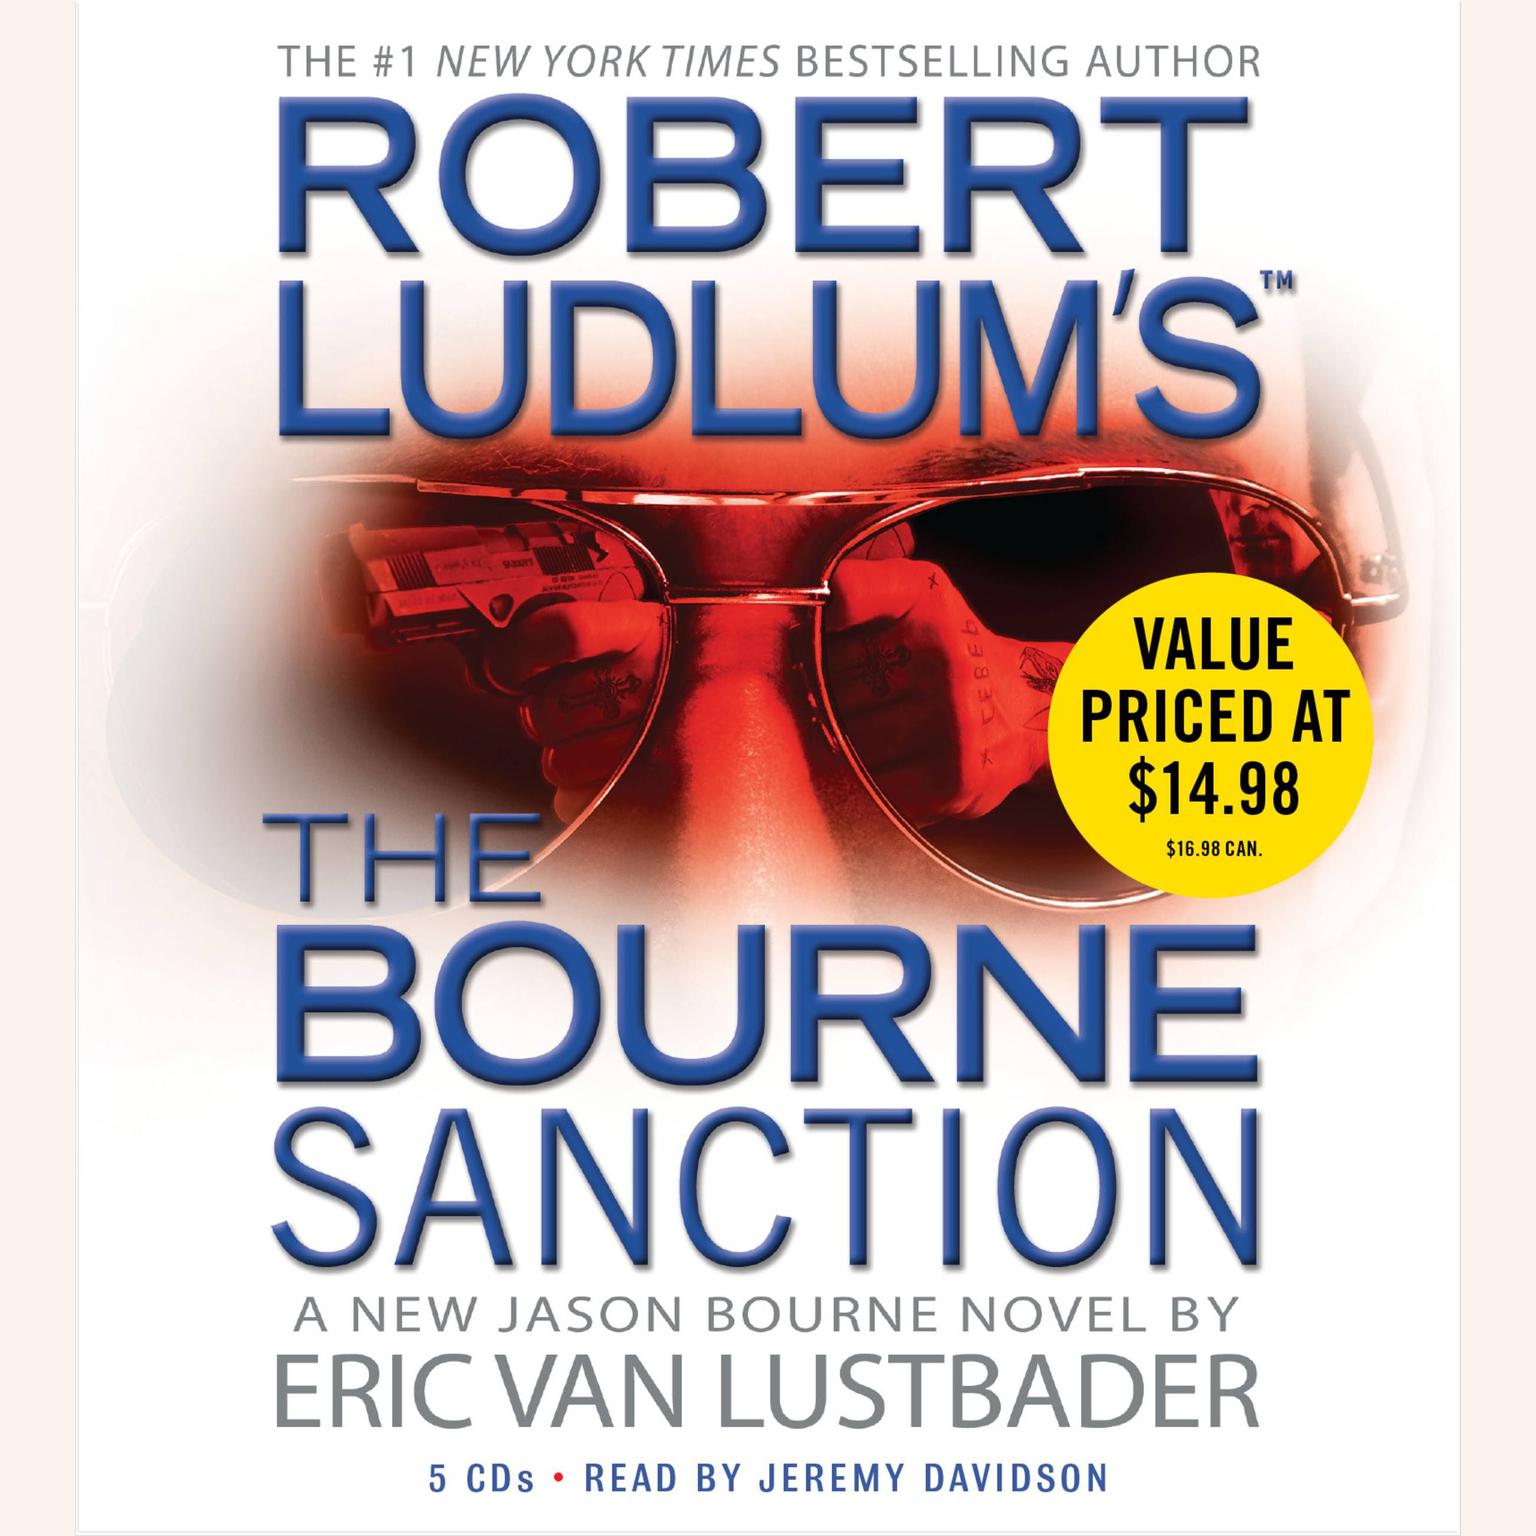 Robert Ludlums (TM) The Bourne Sanction (Abridged) Audiobook, by Eric Van Lustbader